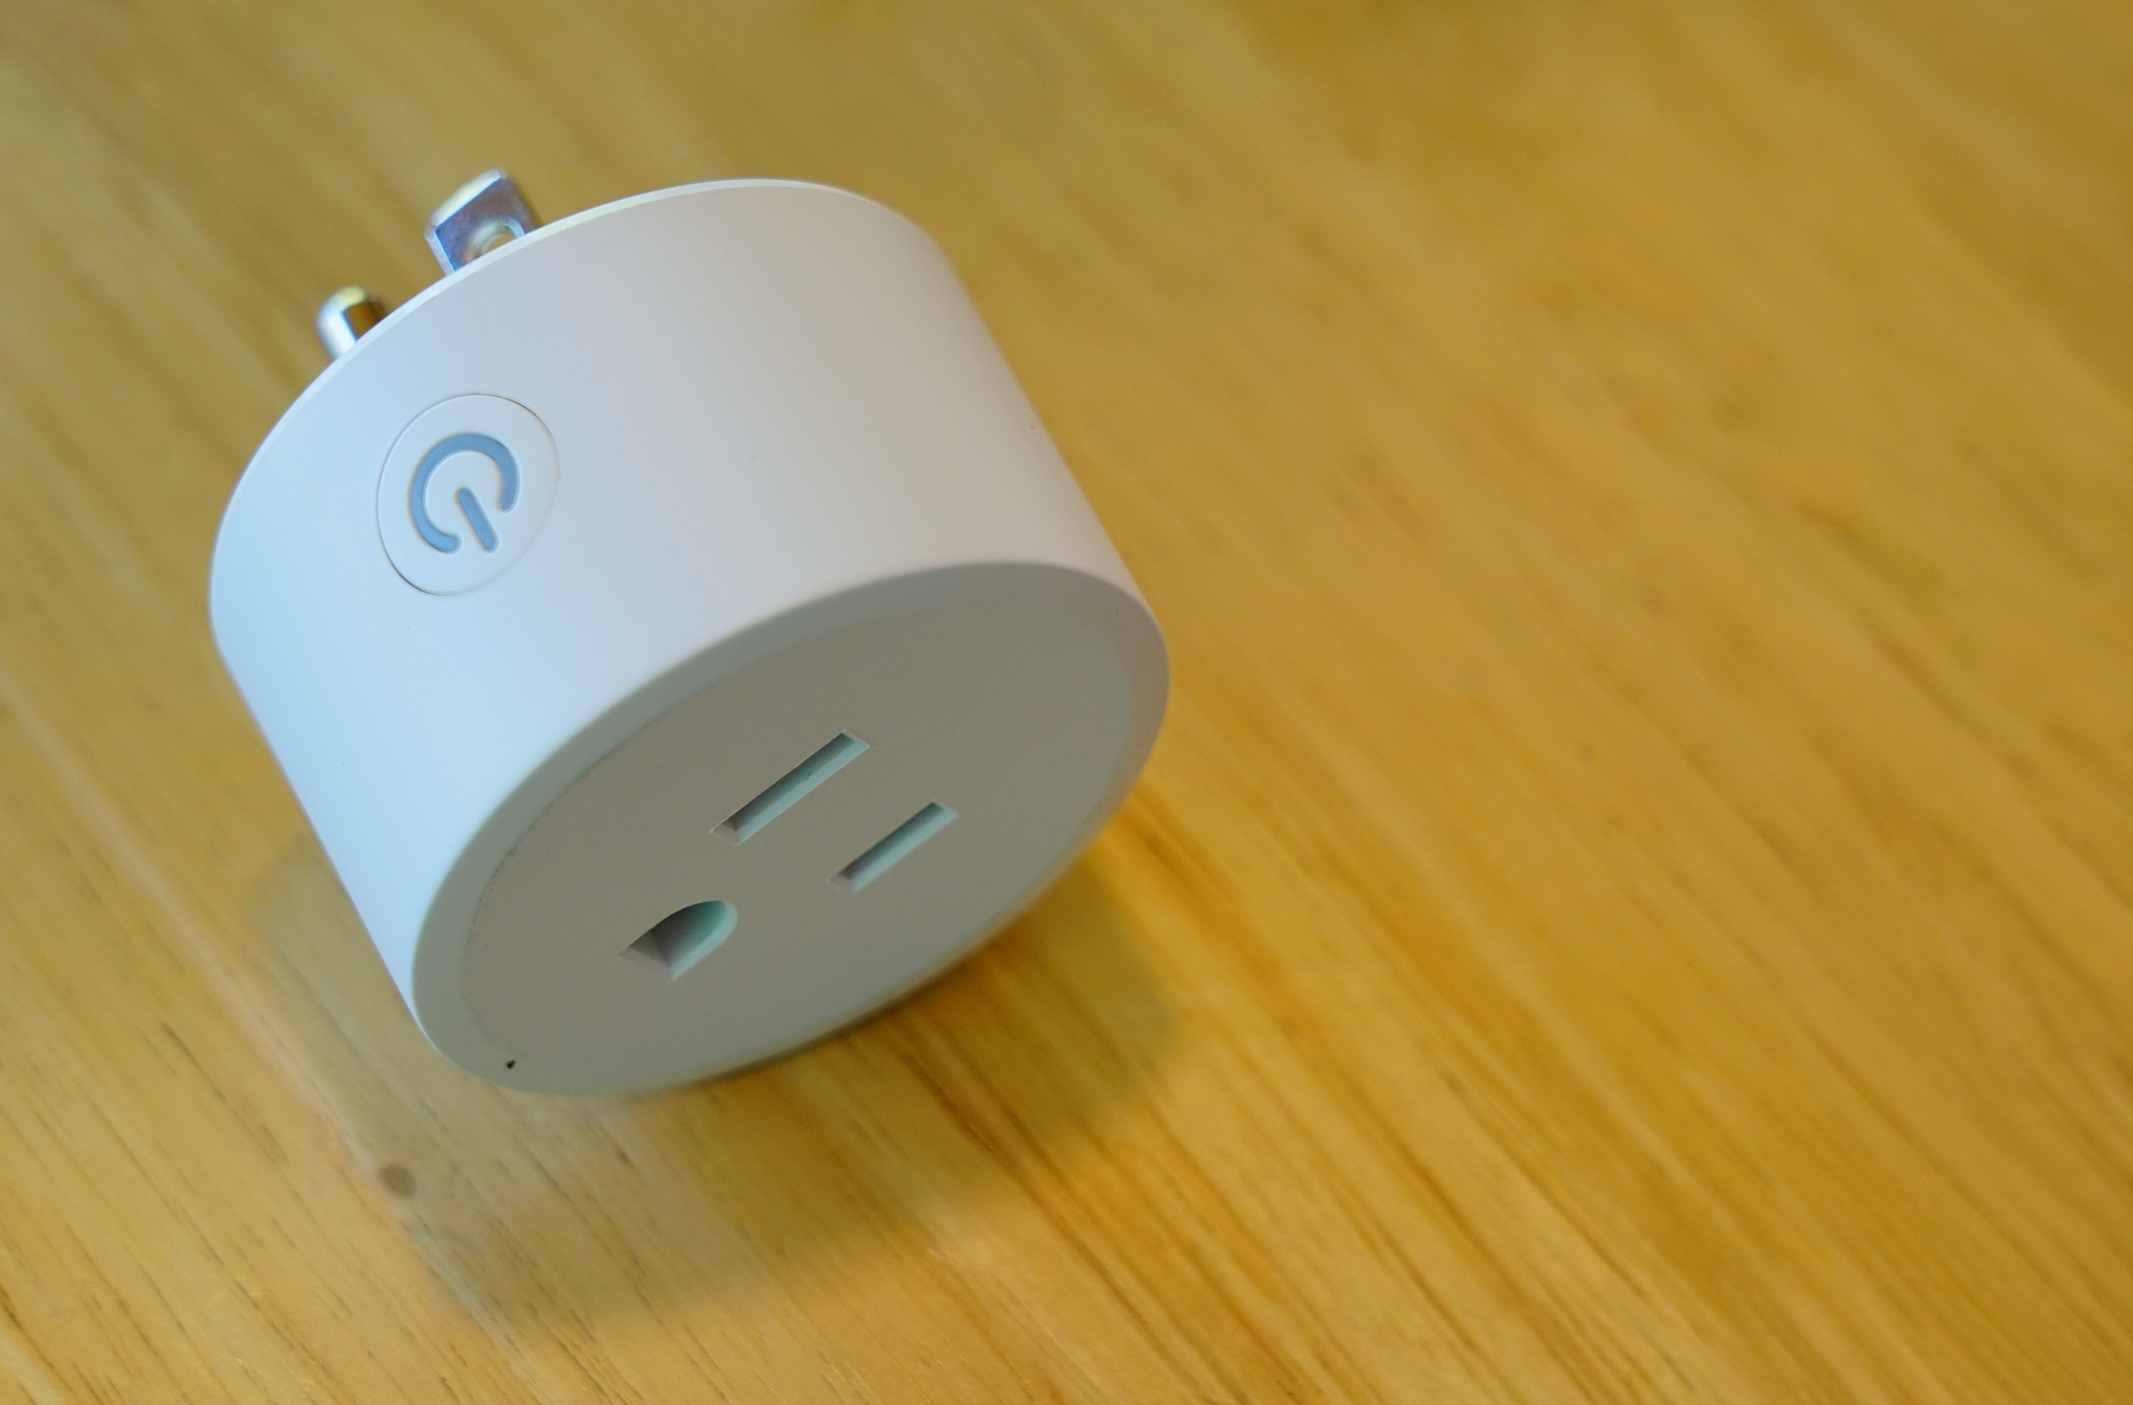 A smart plug